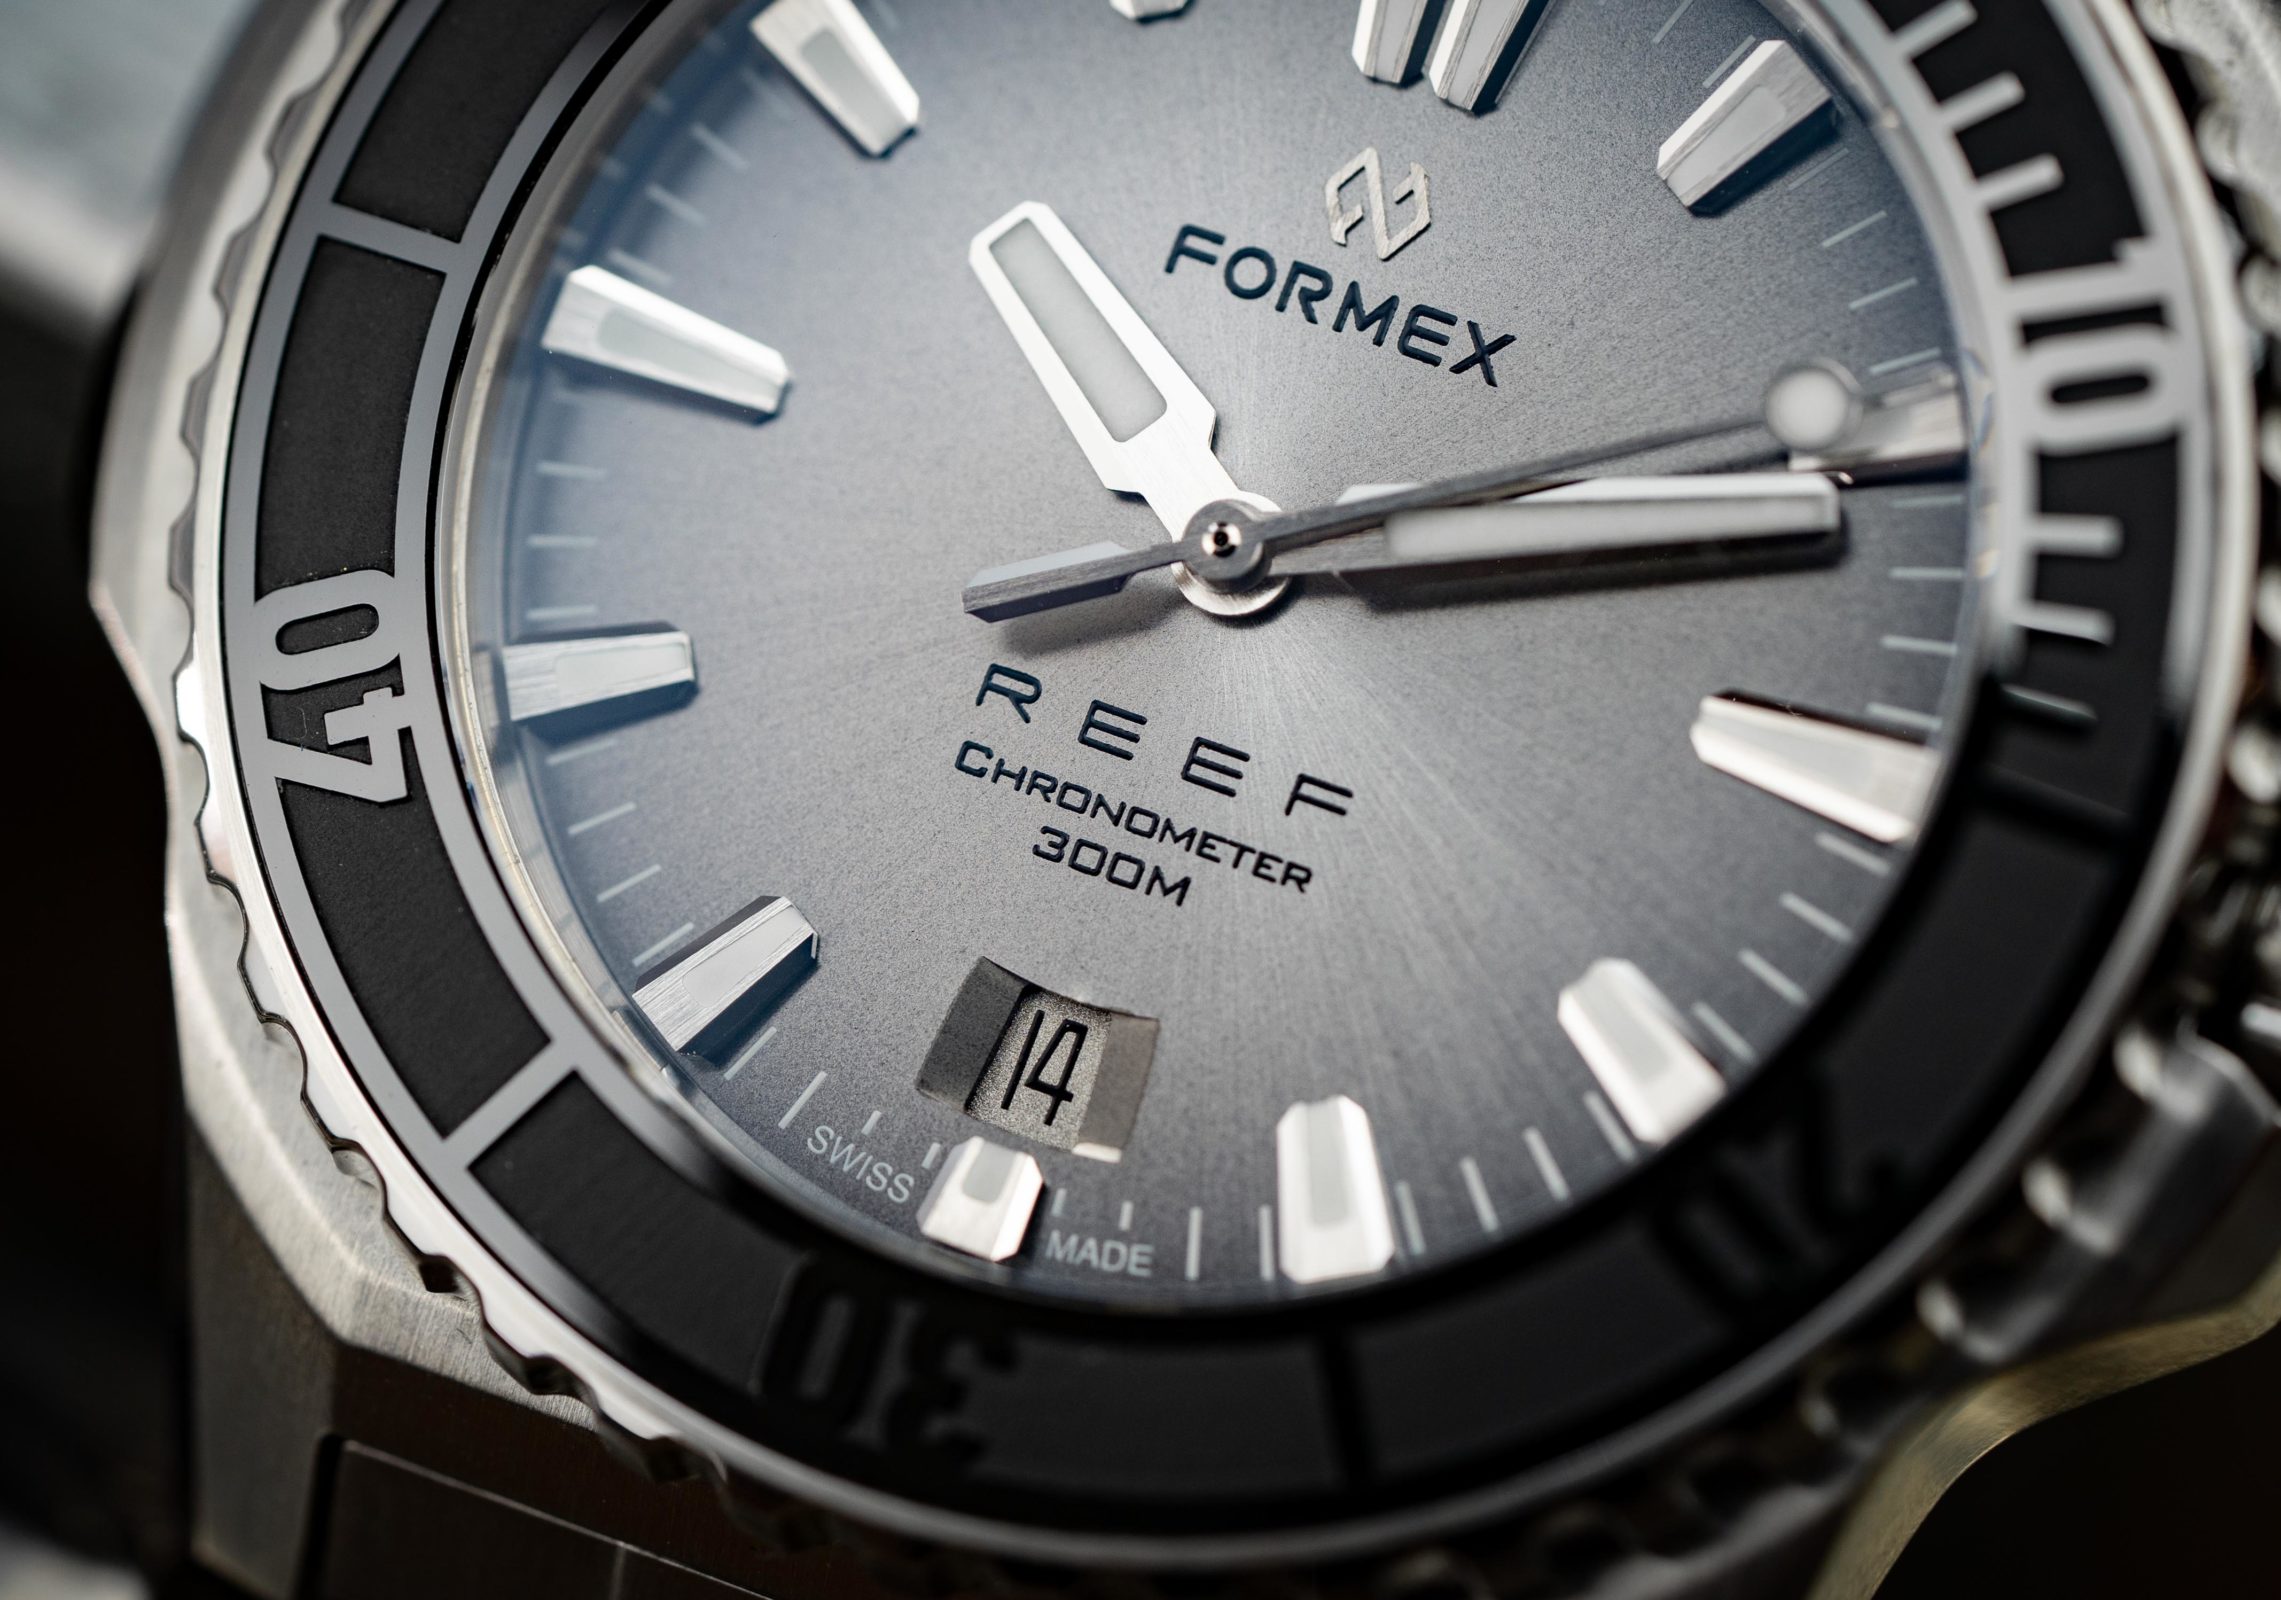 Formex-Reef-Automatik-Chronometer-300m-Test-Review